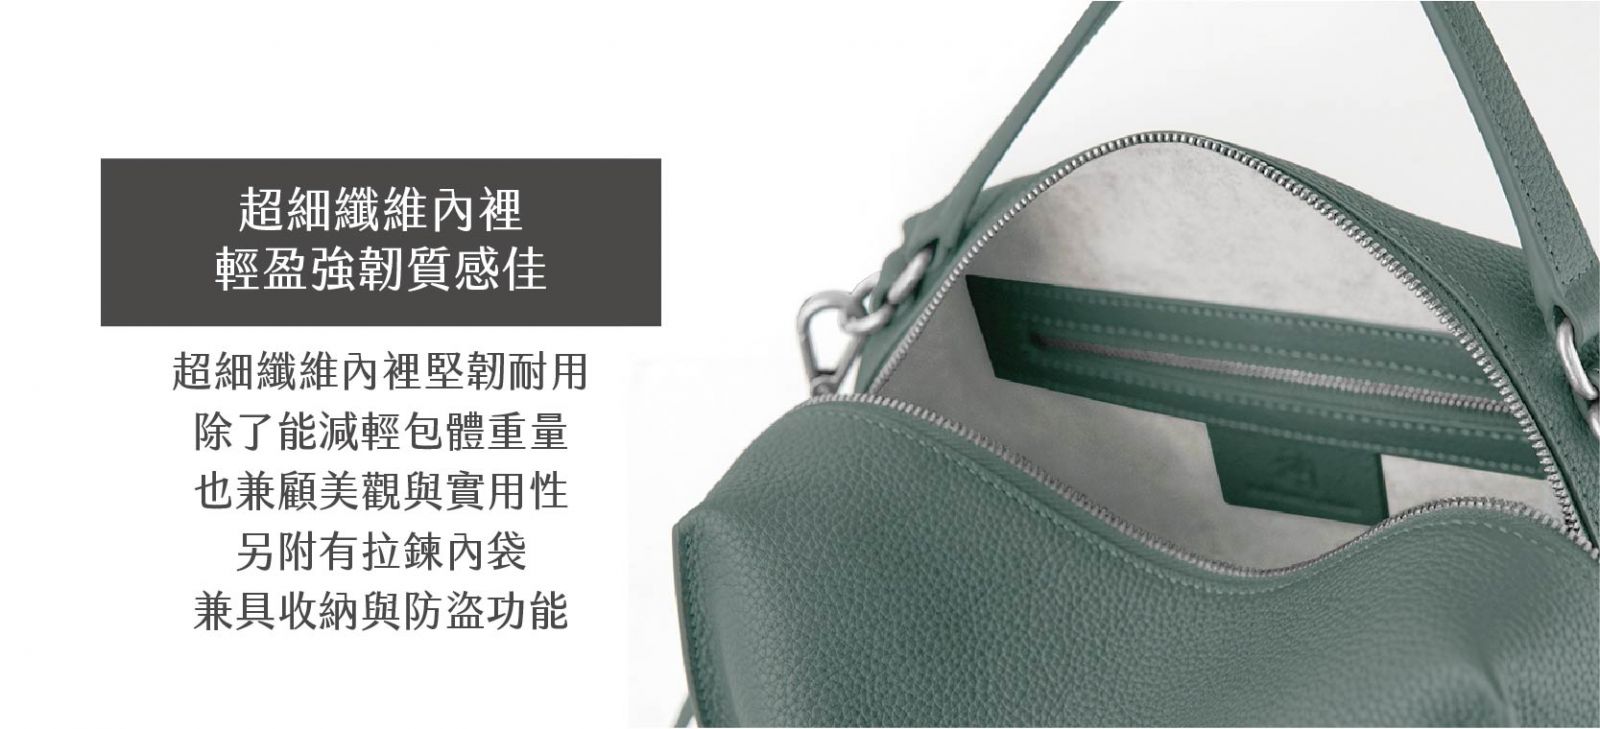 DTB_Mini Valley Cube Shoulder Bag迷你方型軟包-Sagebrush Green鼠尾草綠